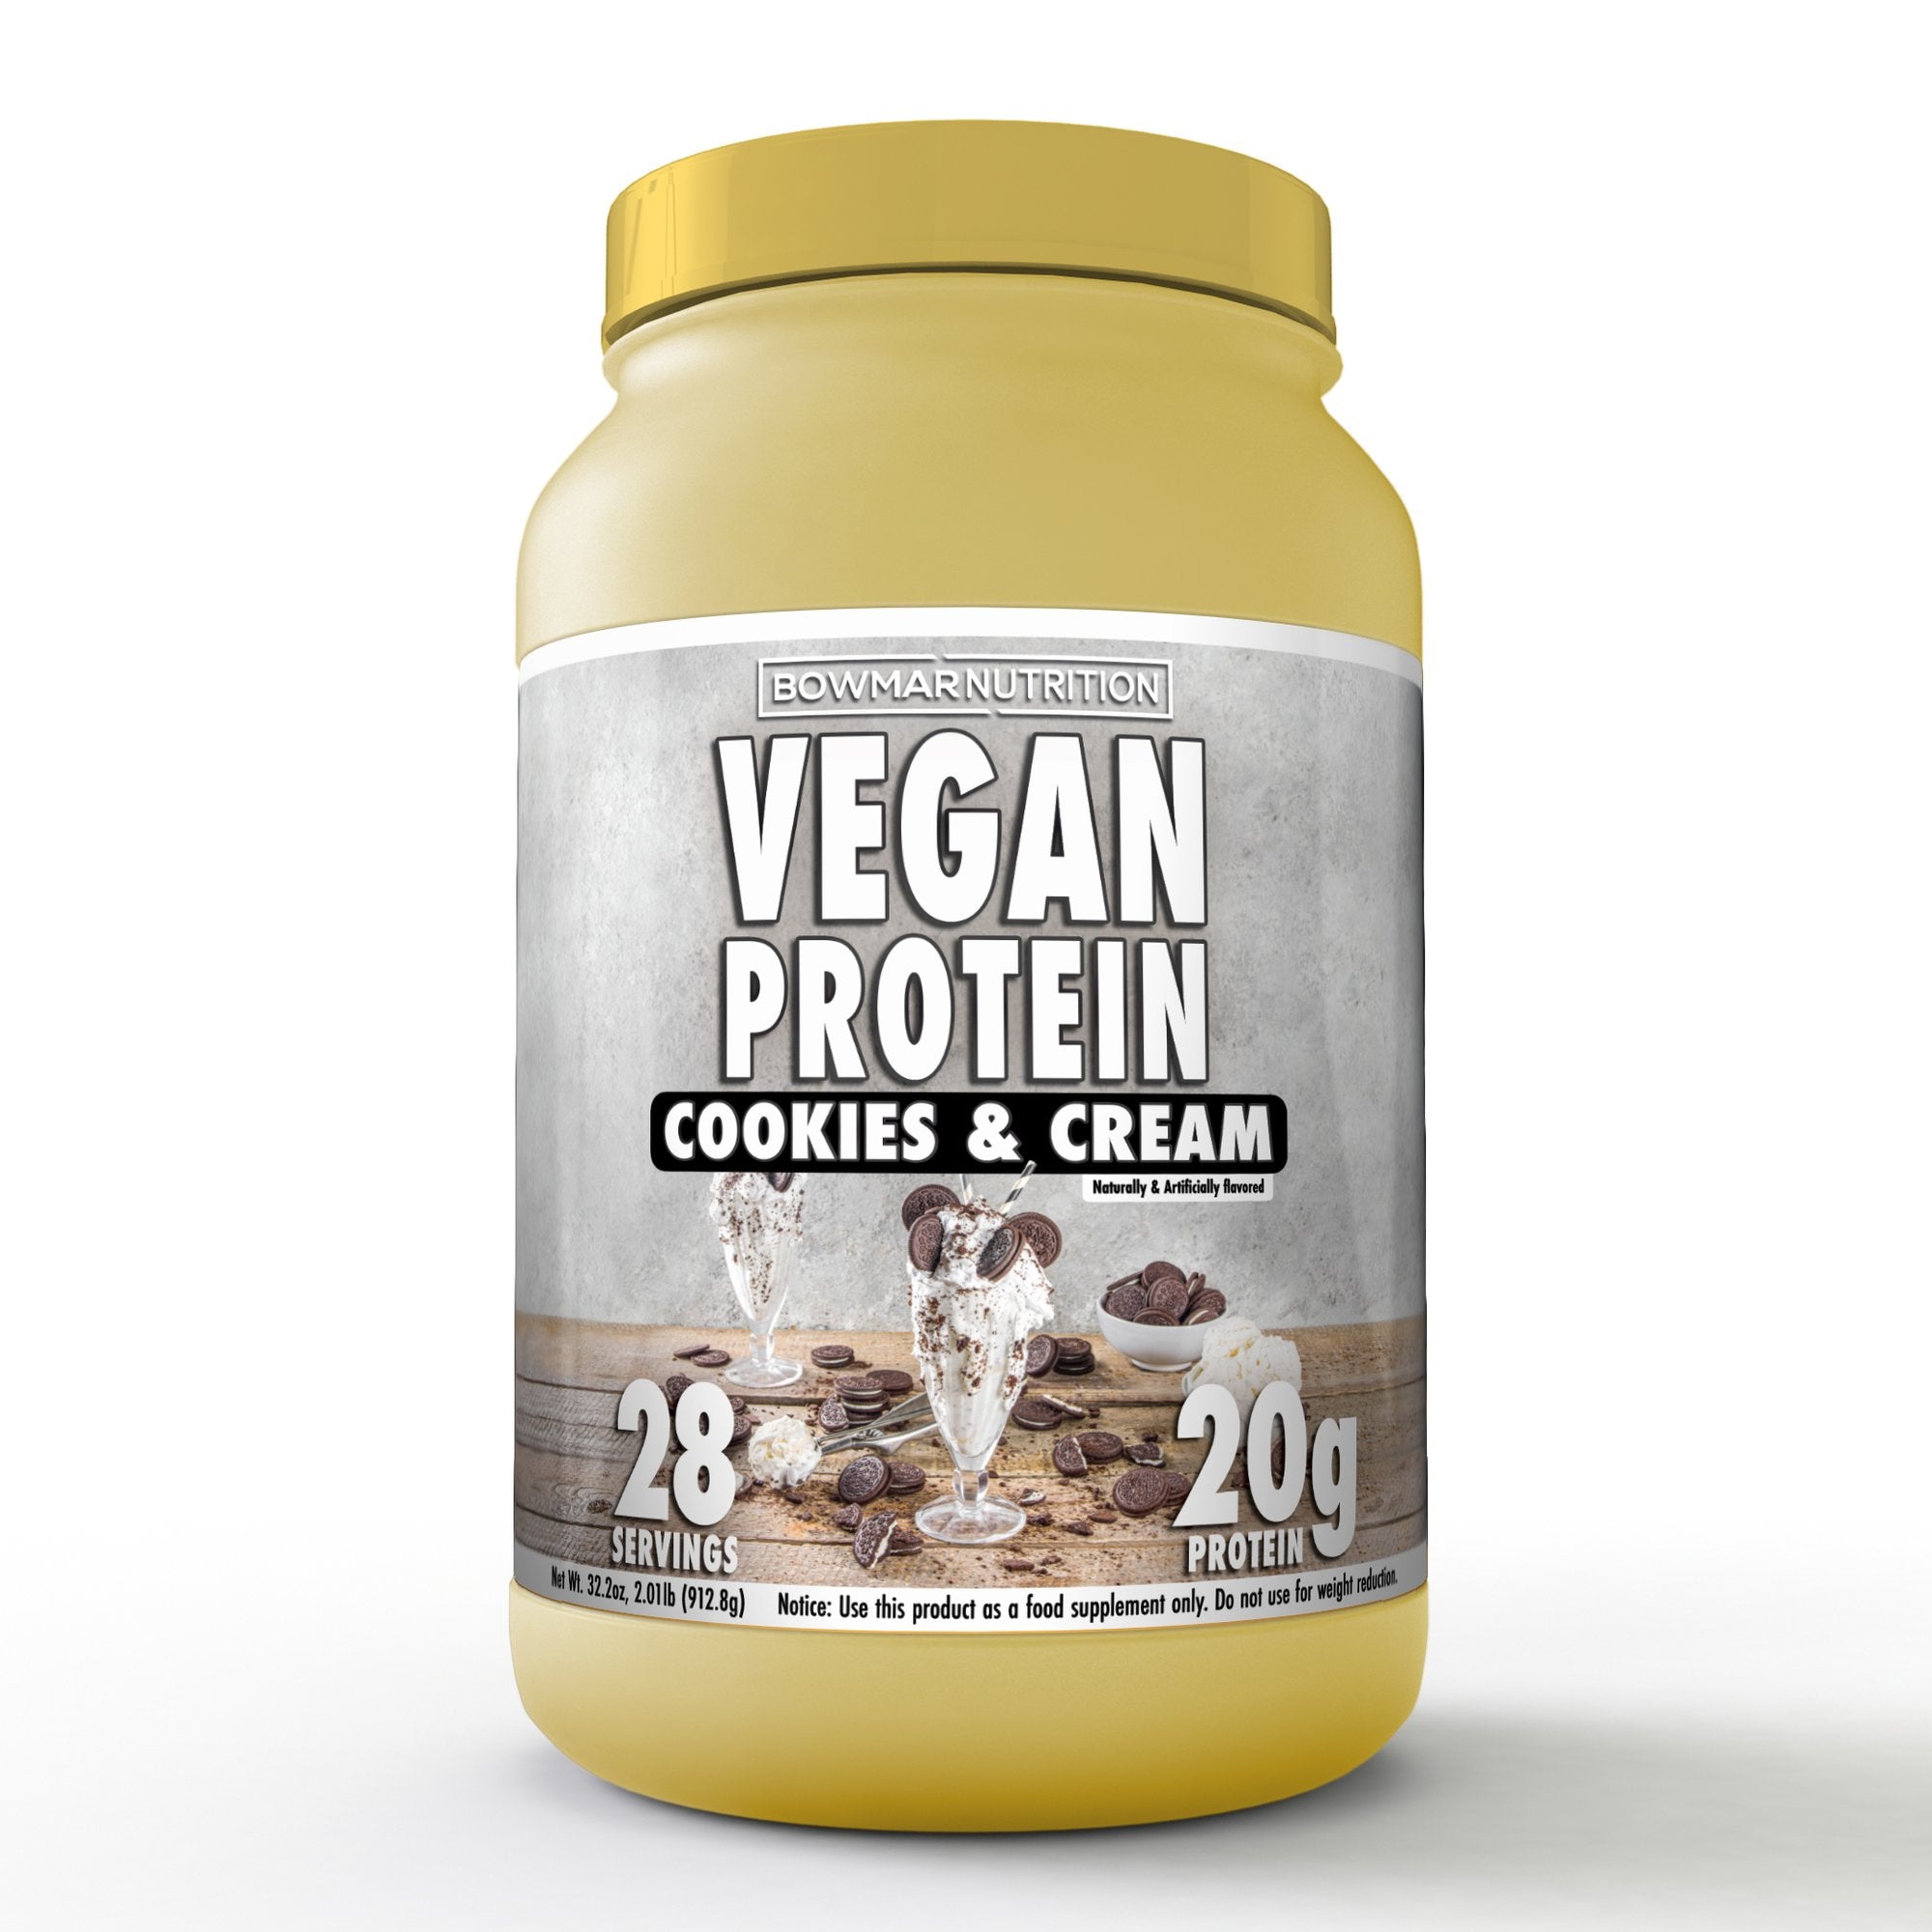 Bowmar Nutrition Vegan Protein (2lb) Vegan Protein Cookies And Cream bowmar bowmar-nutrition-vegan-protein-2lb